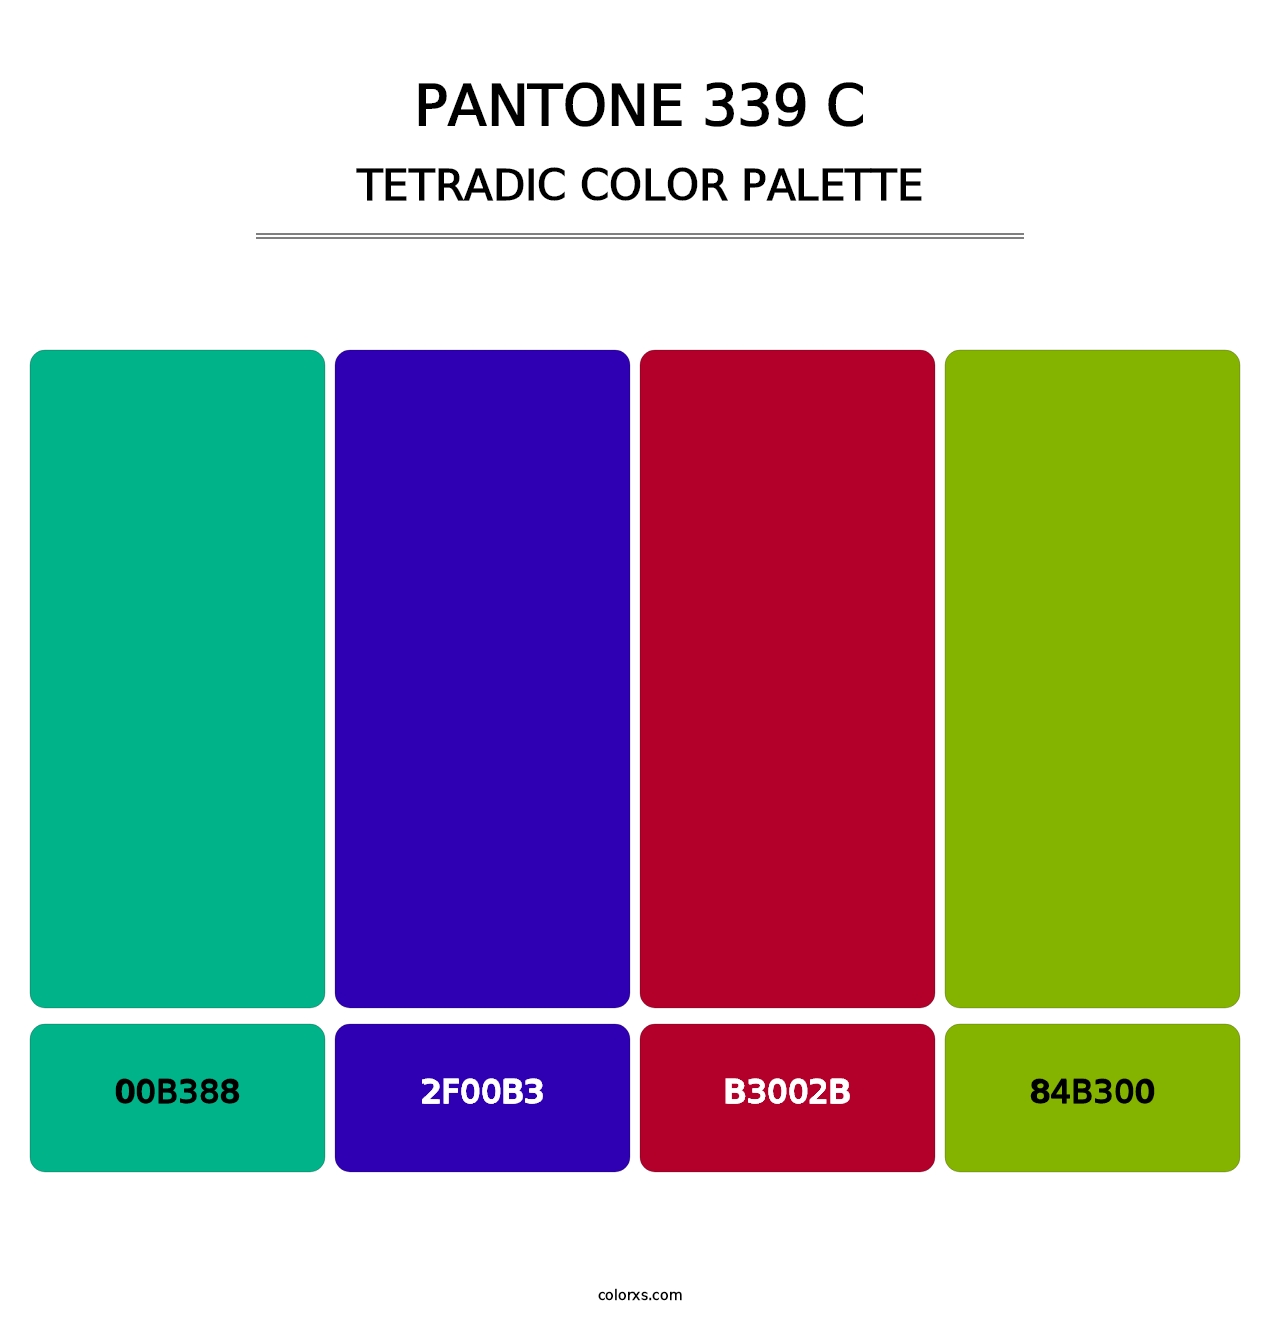 PANTONE 339 C - Tetradic Color Palette